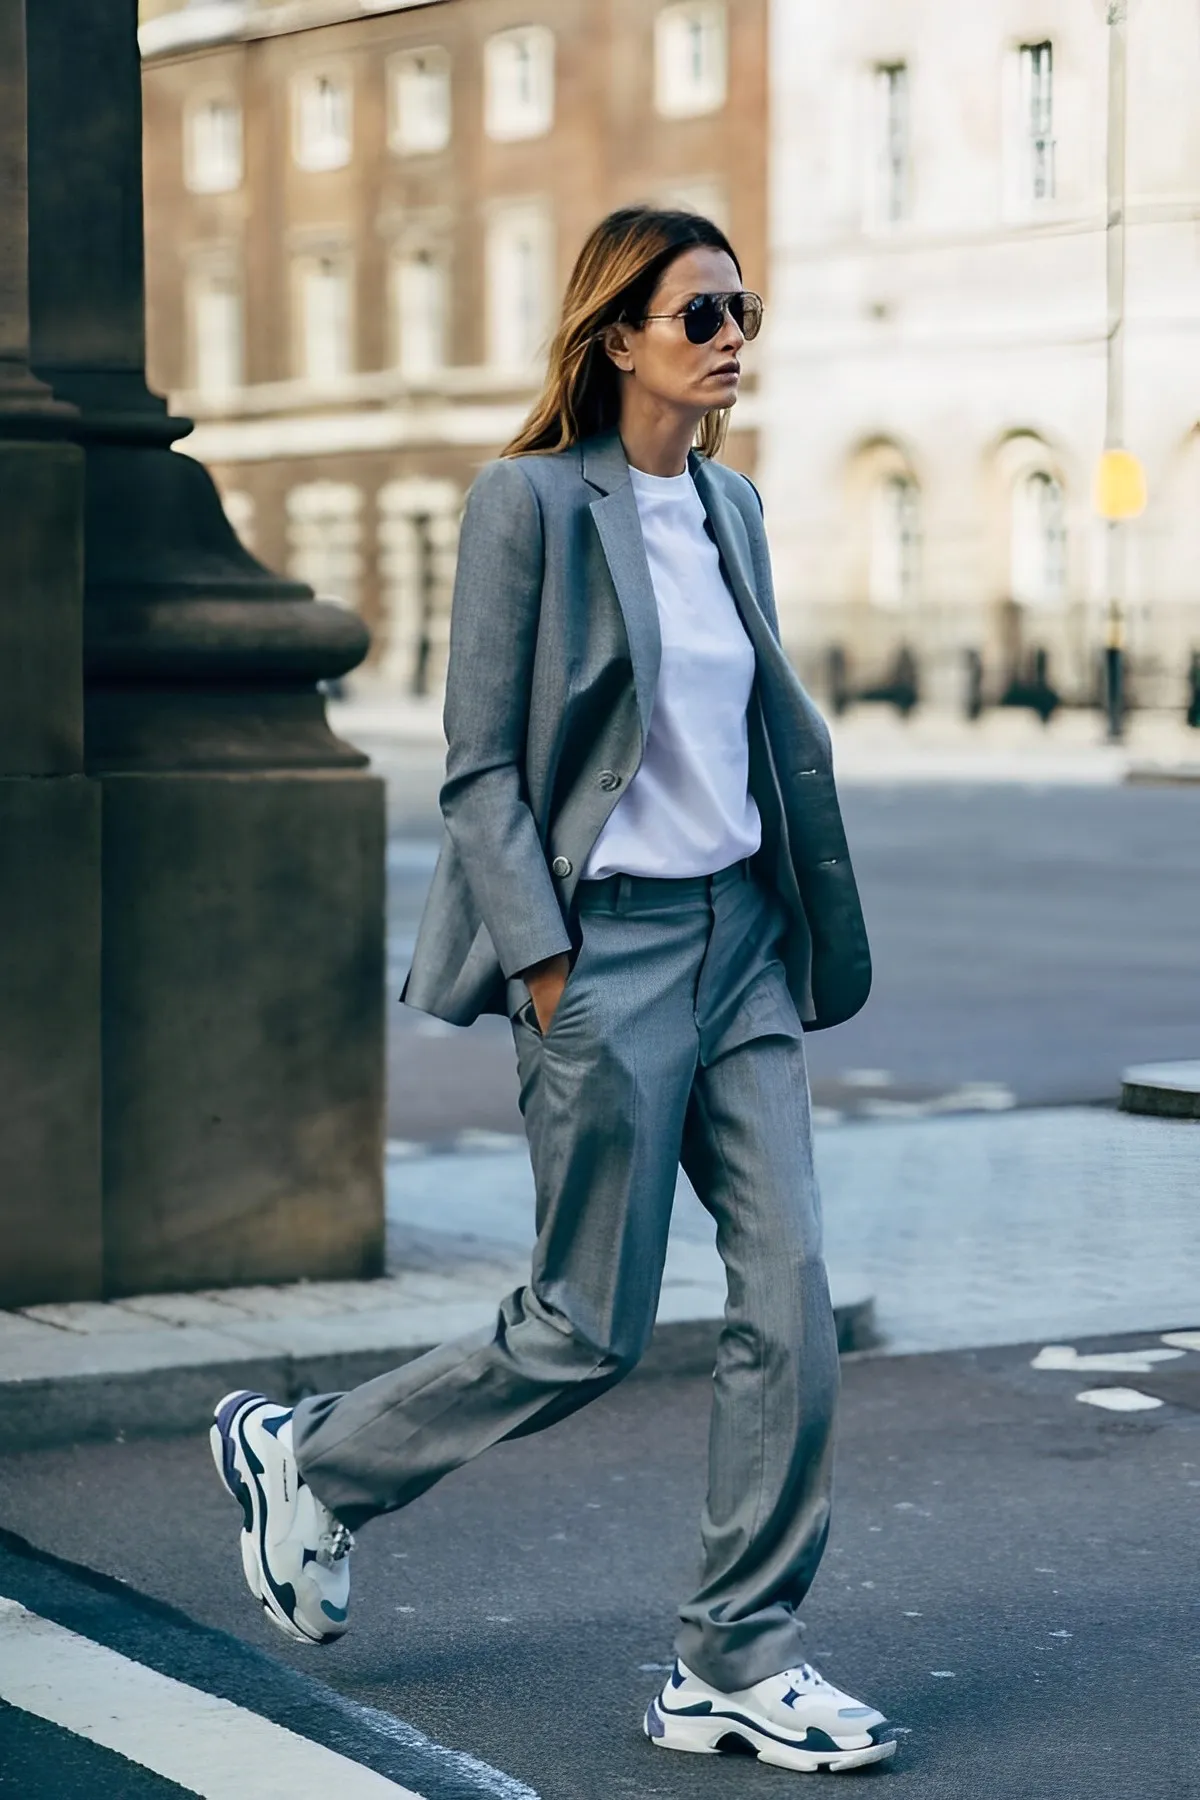 ensemble tailleur pantalon gris blouse blanche baskets femme moderne